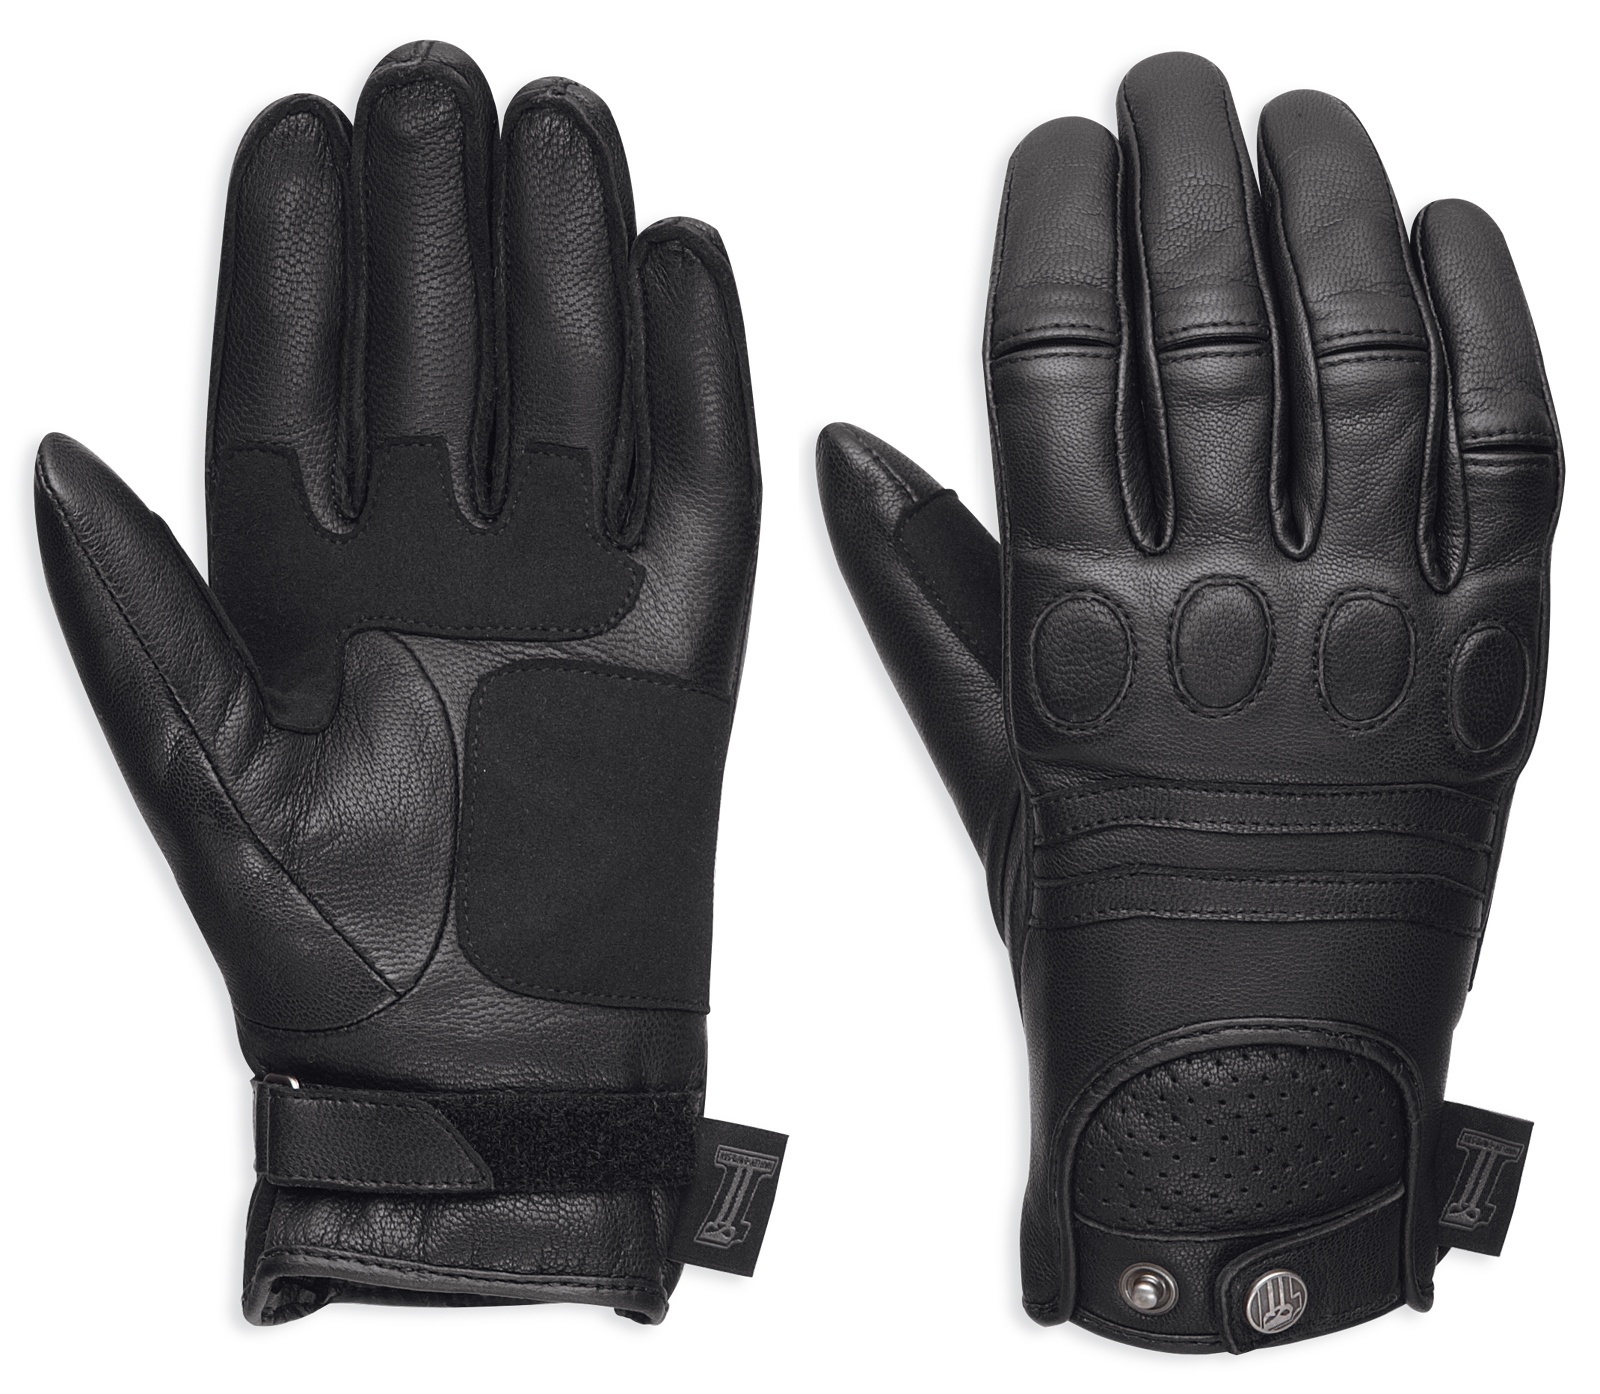 98375 17ew Harley Davidson Women S 1 Skull Leather Gloves Ec At Thunderbike Shop